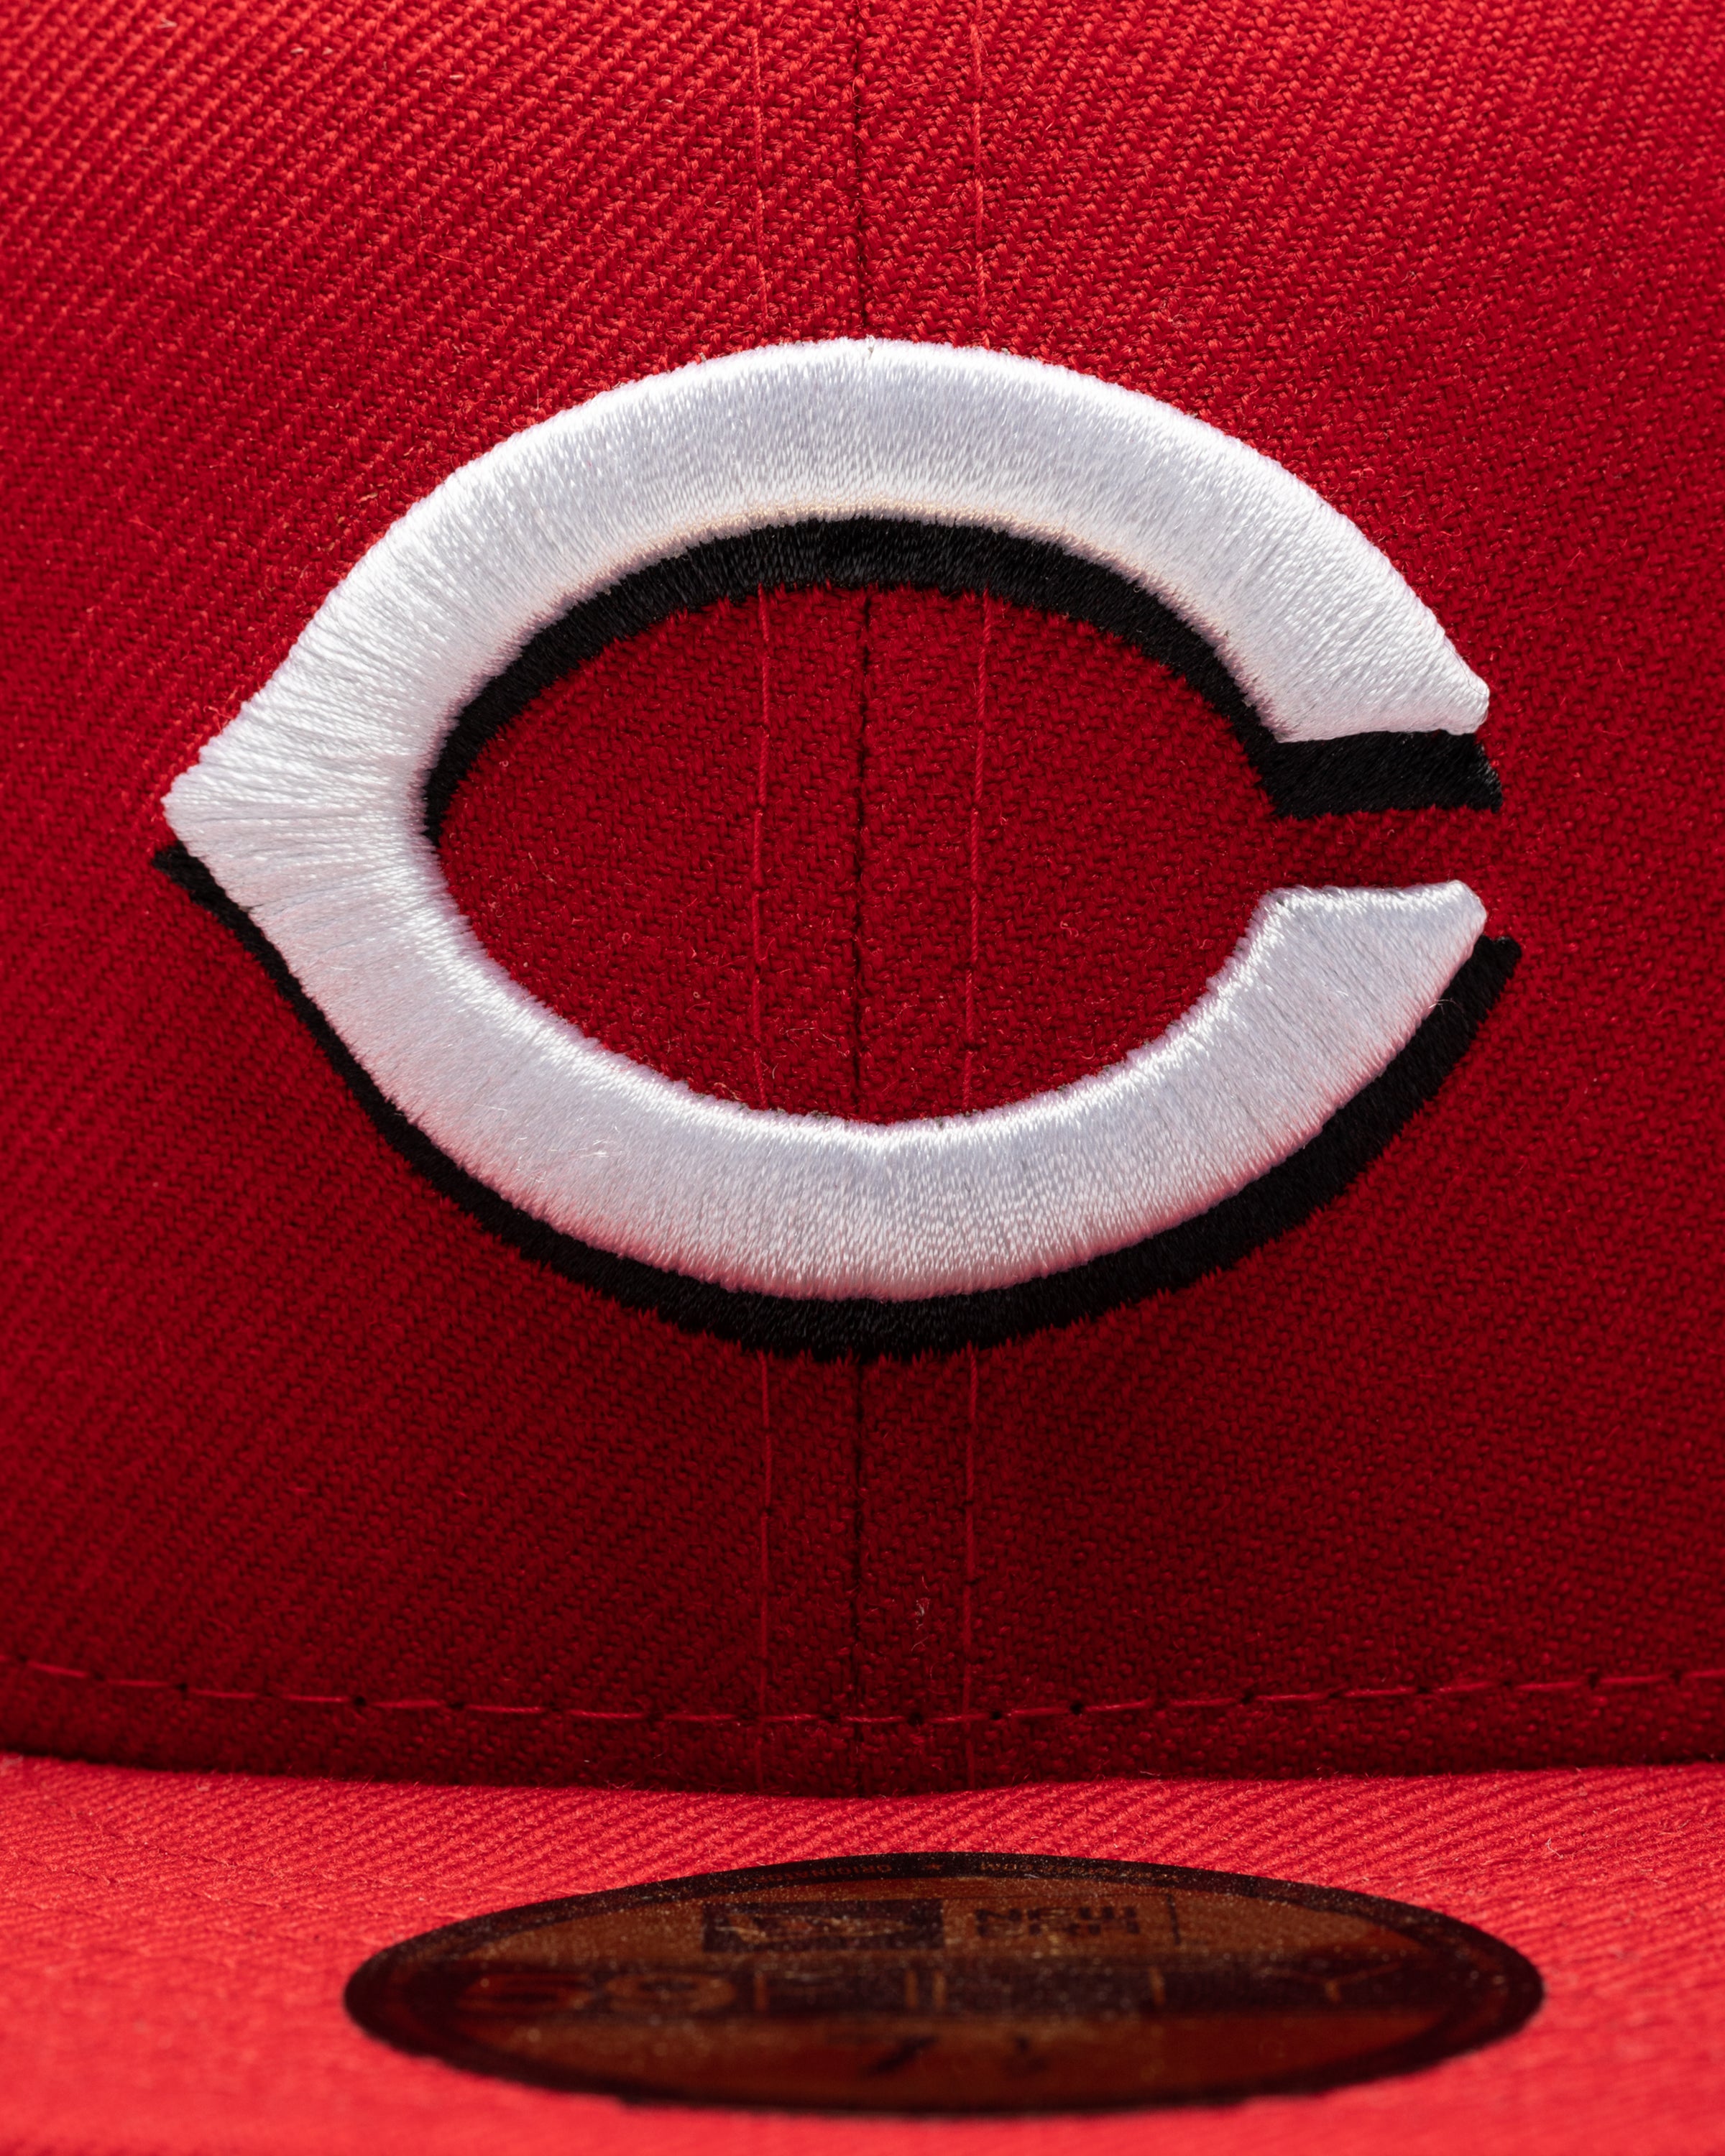 Cincinnati Reds on X: Gearing up ⚙️ #CINCY ╳ #CityConnect